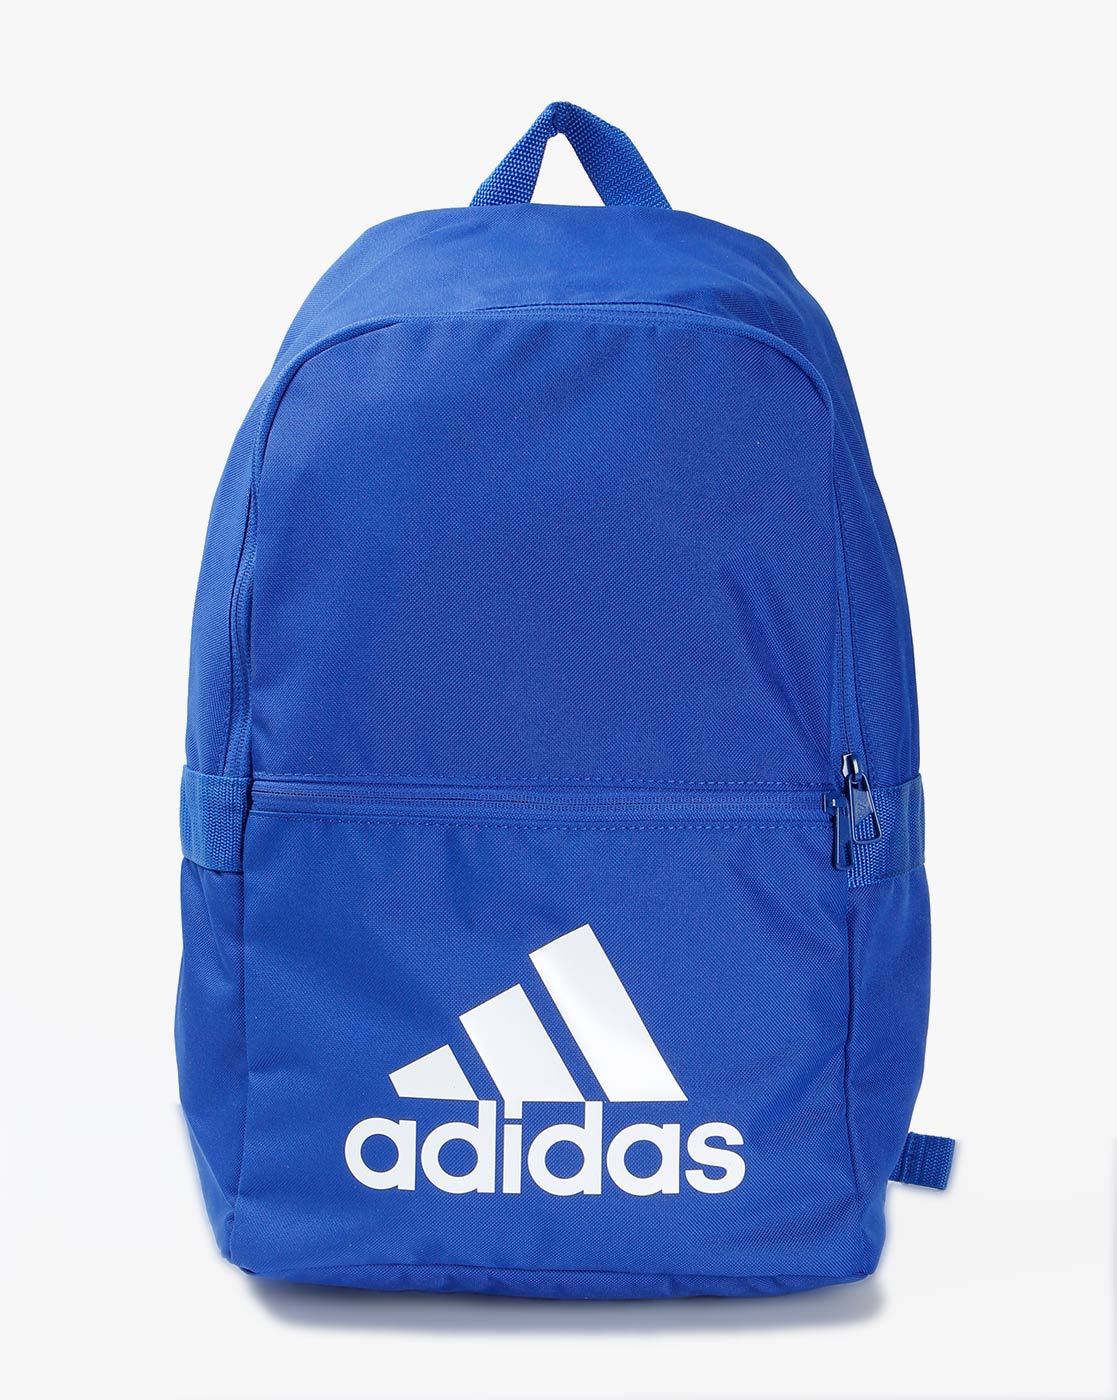 adidas Backpack - Blue | adidas Vietnam